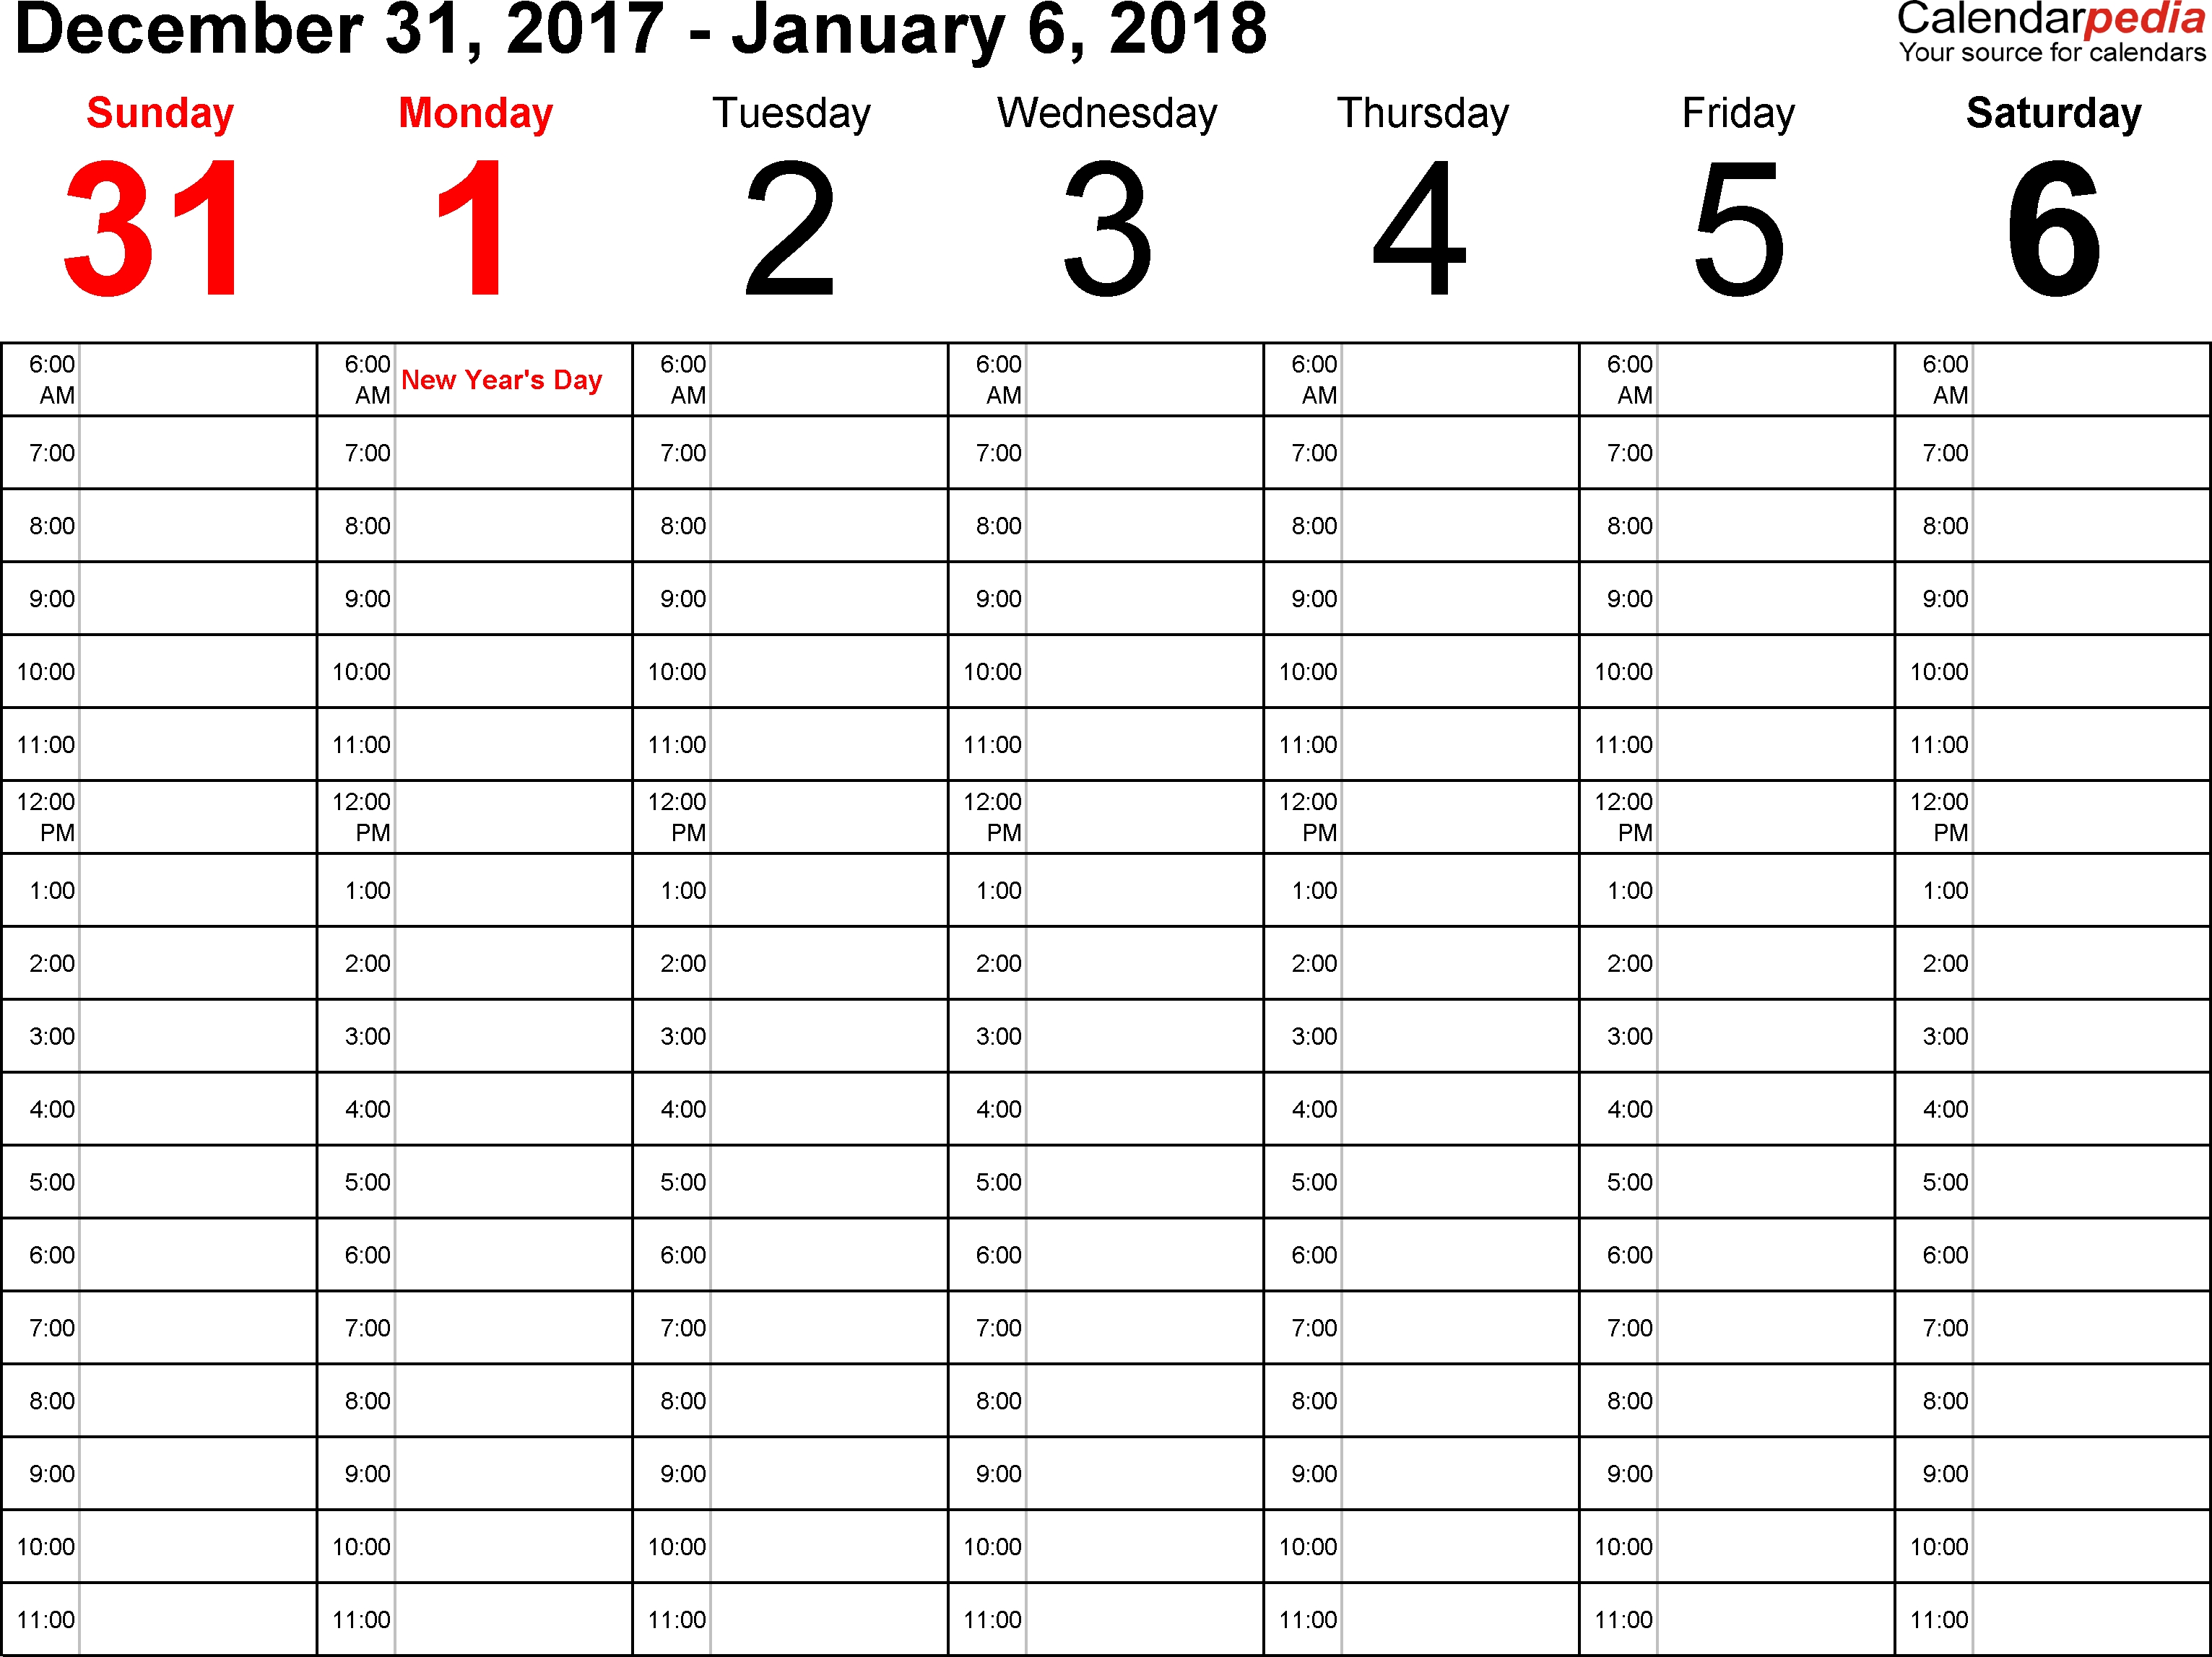 Weekly Calendar 2018 For Excel - 12 Free Printable Templates throughout Outlook Calendar Template 5 Week